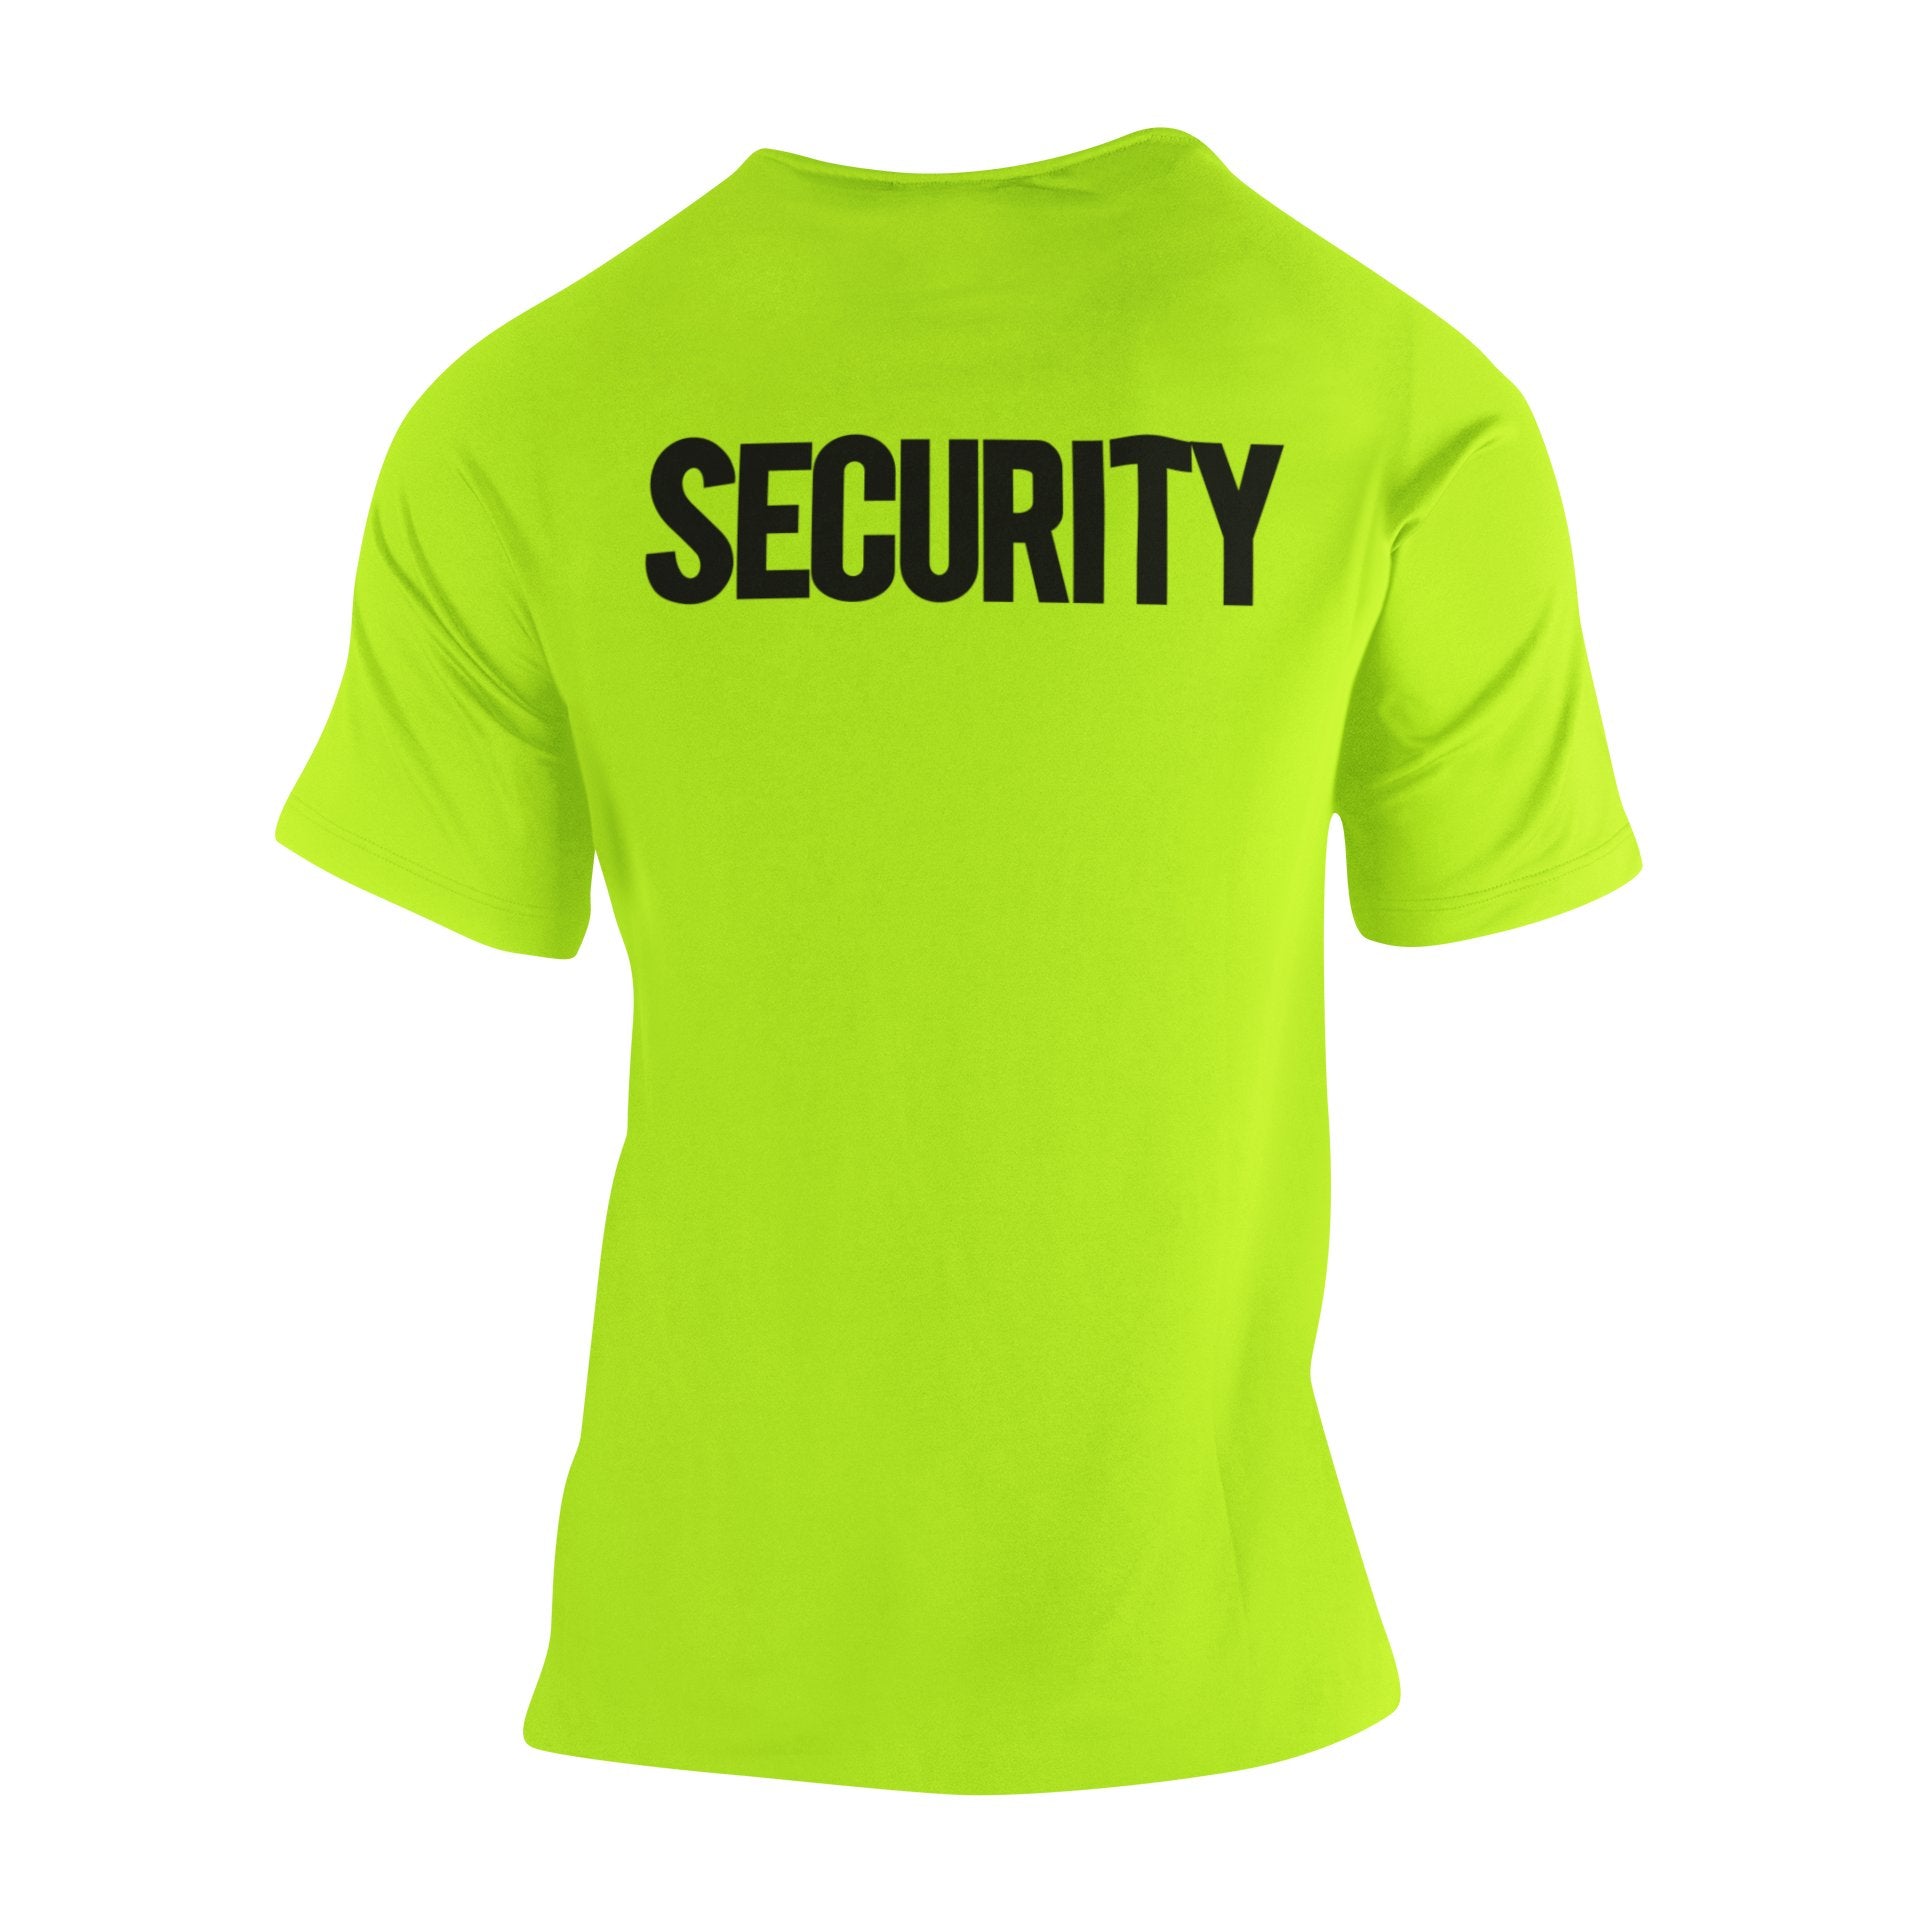 Men's Security Tee (Solid Design, Front & Back Print, Safety Green & Black)